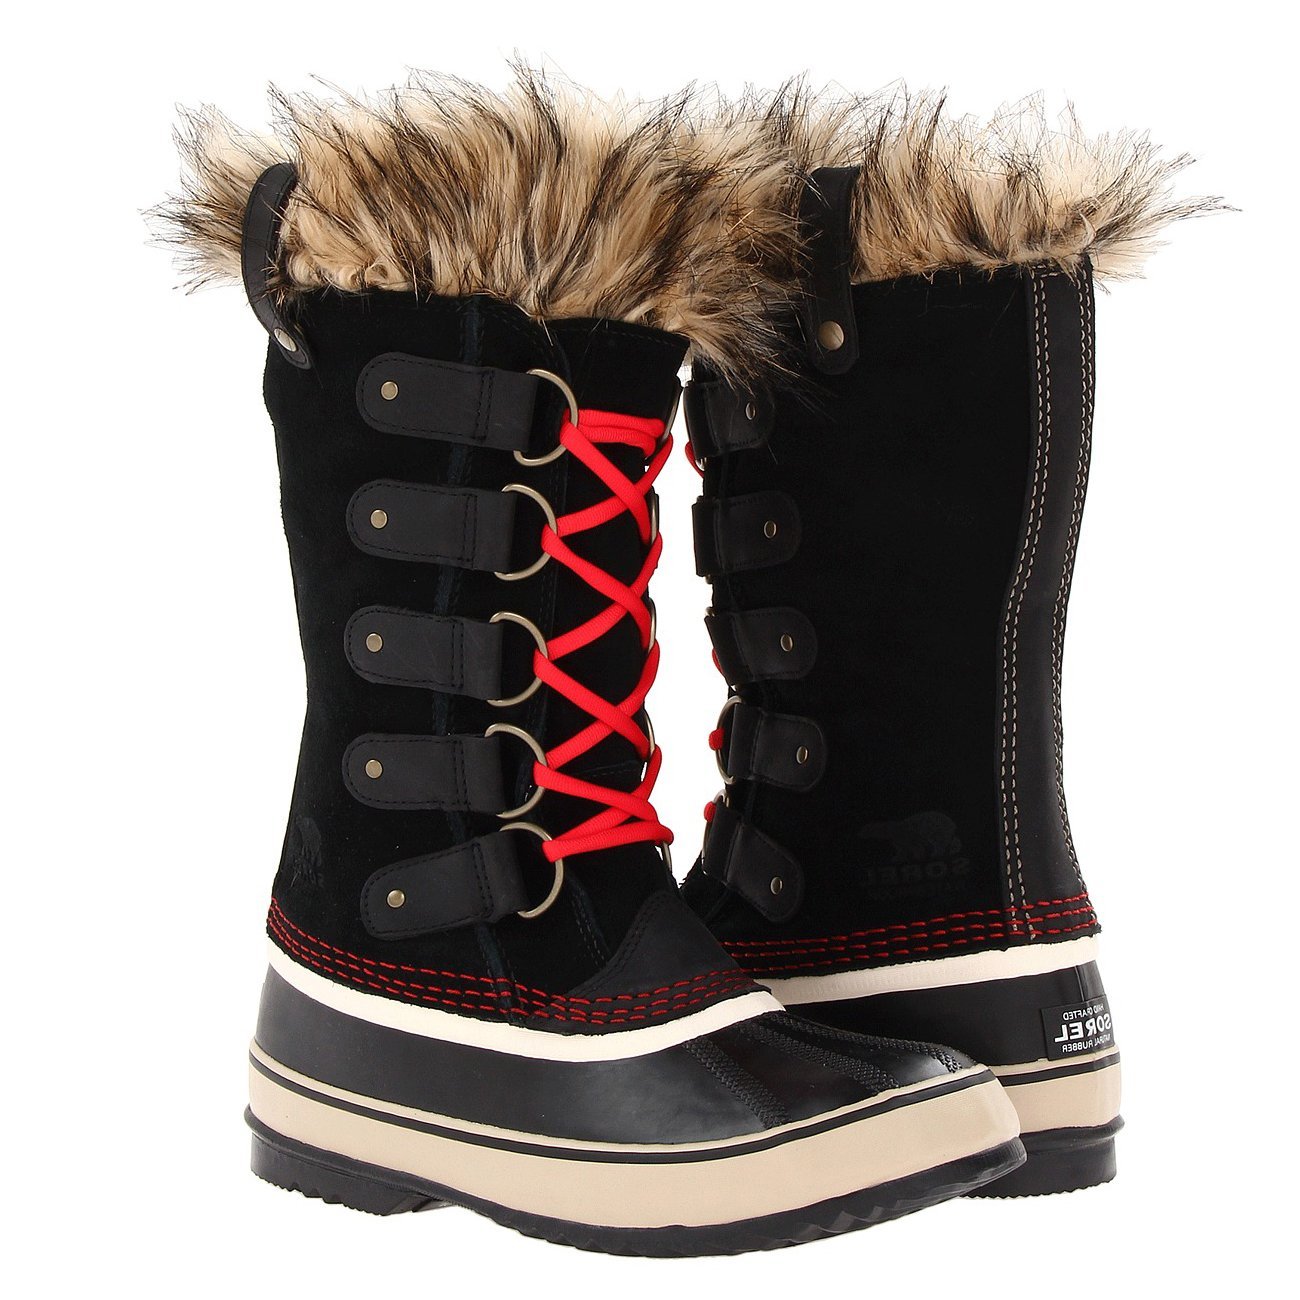 sorel joan of arctic boots sorel women;s joan of arctic snow boot reviews ehnooja